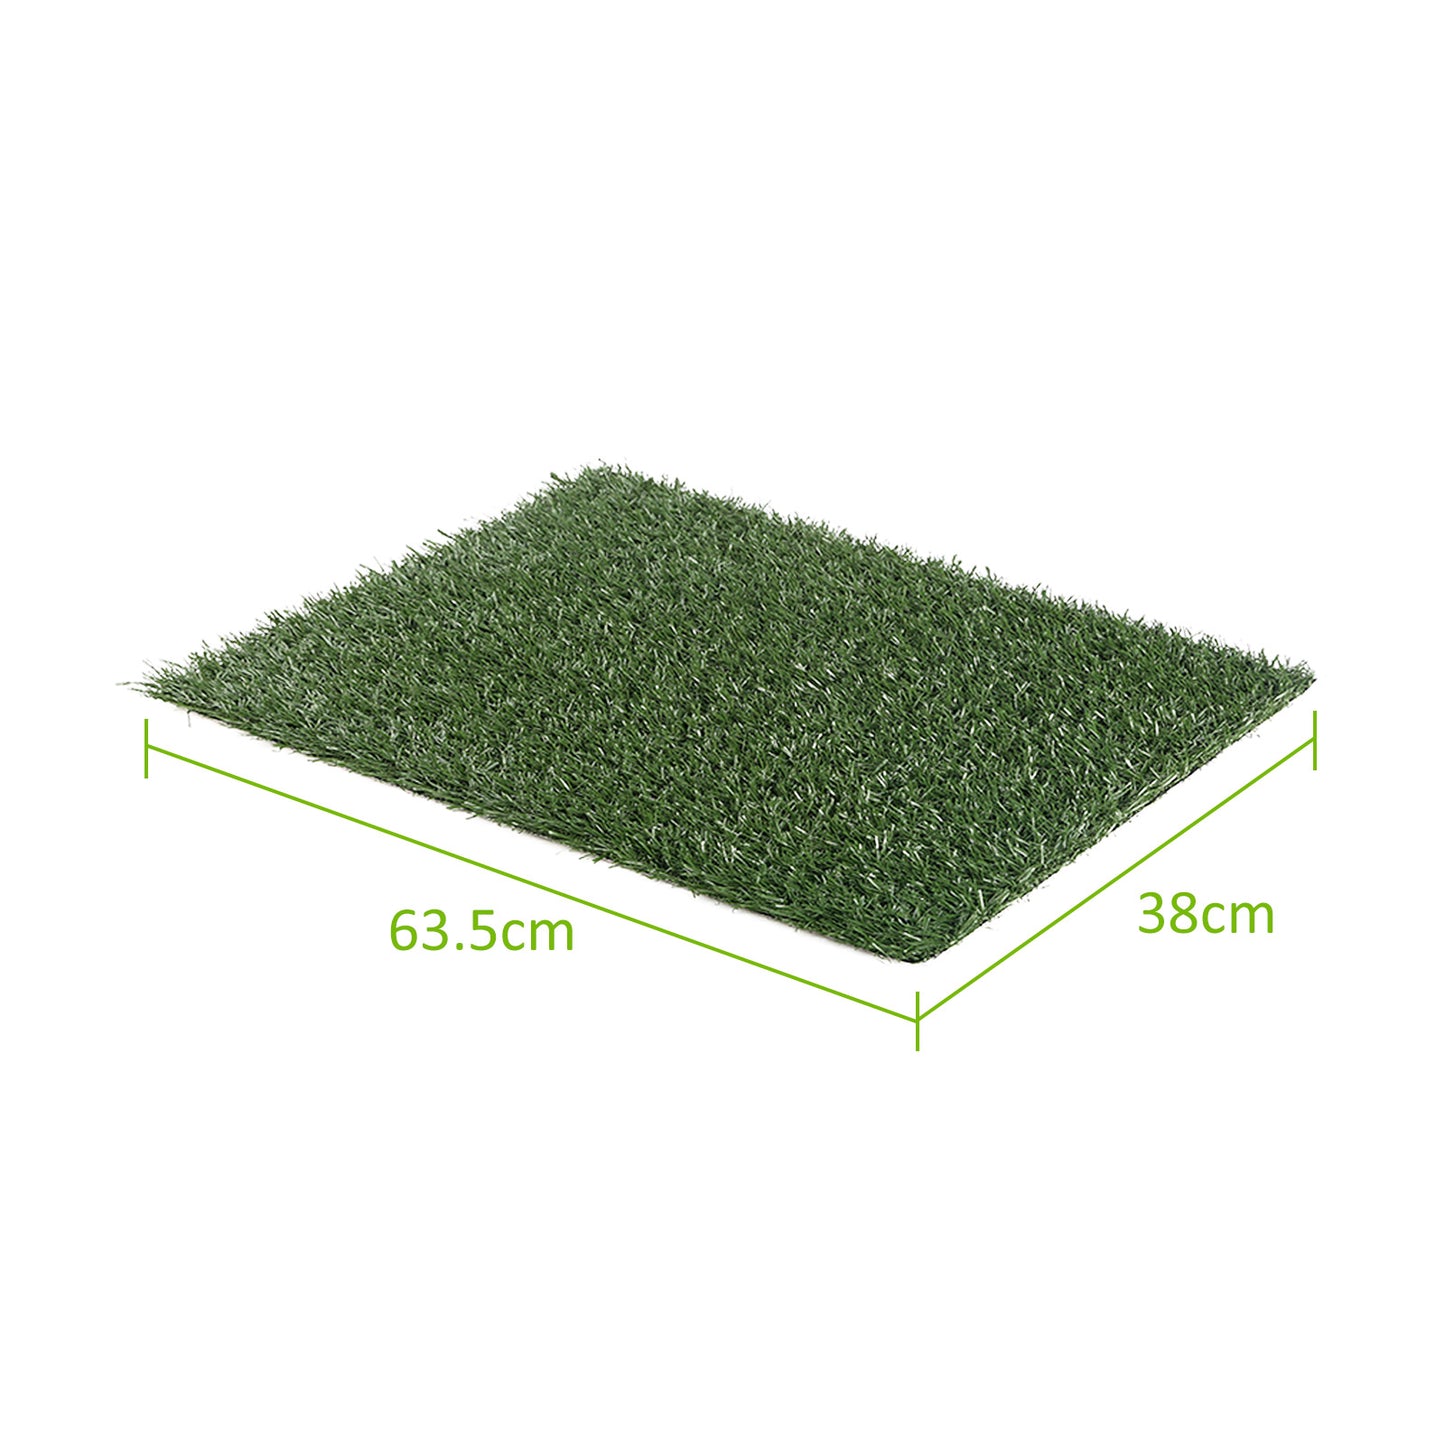 1 Grass Mat for Pet Dog Potty Tray Training Toilet 63.5cm x 38cm - image6